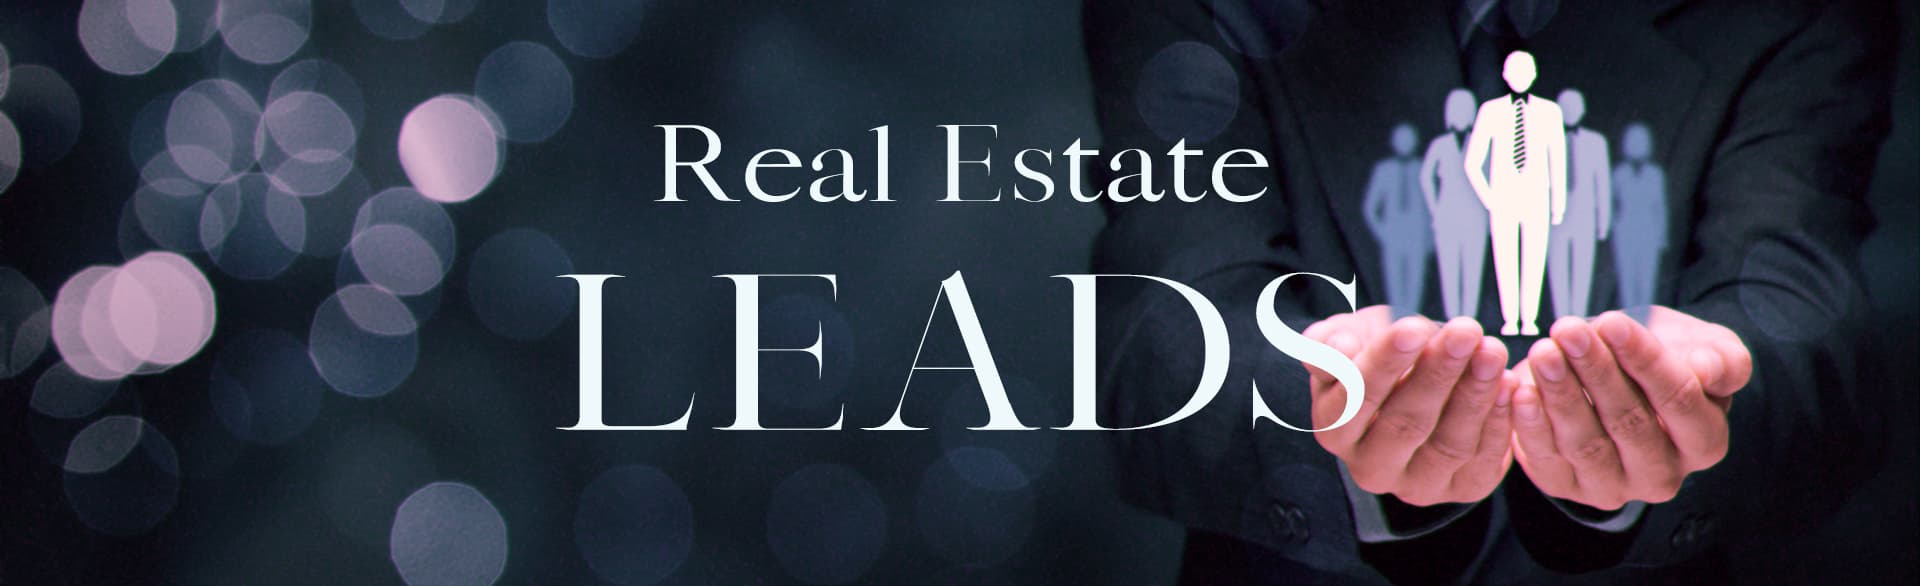 Real Estate Lead Converting: Grow Sales by Nurturing Leads